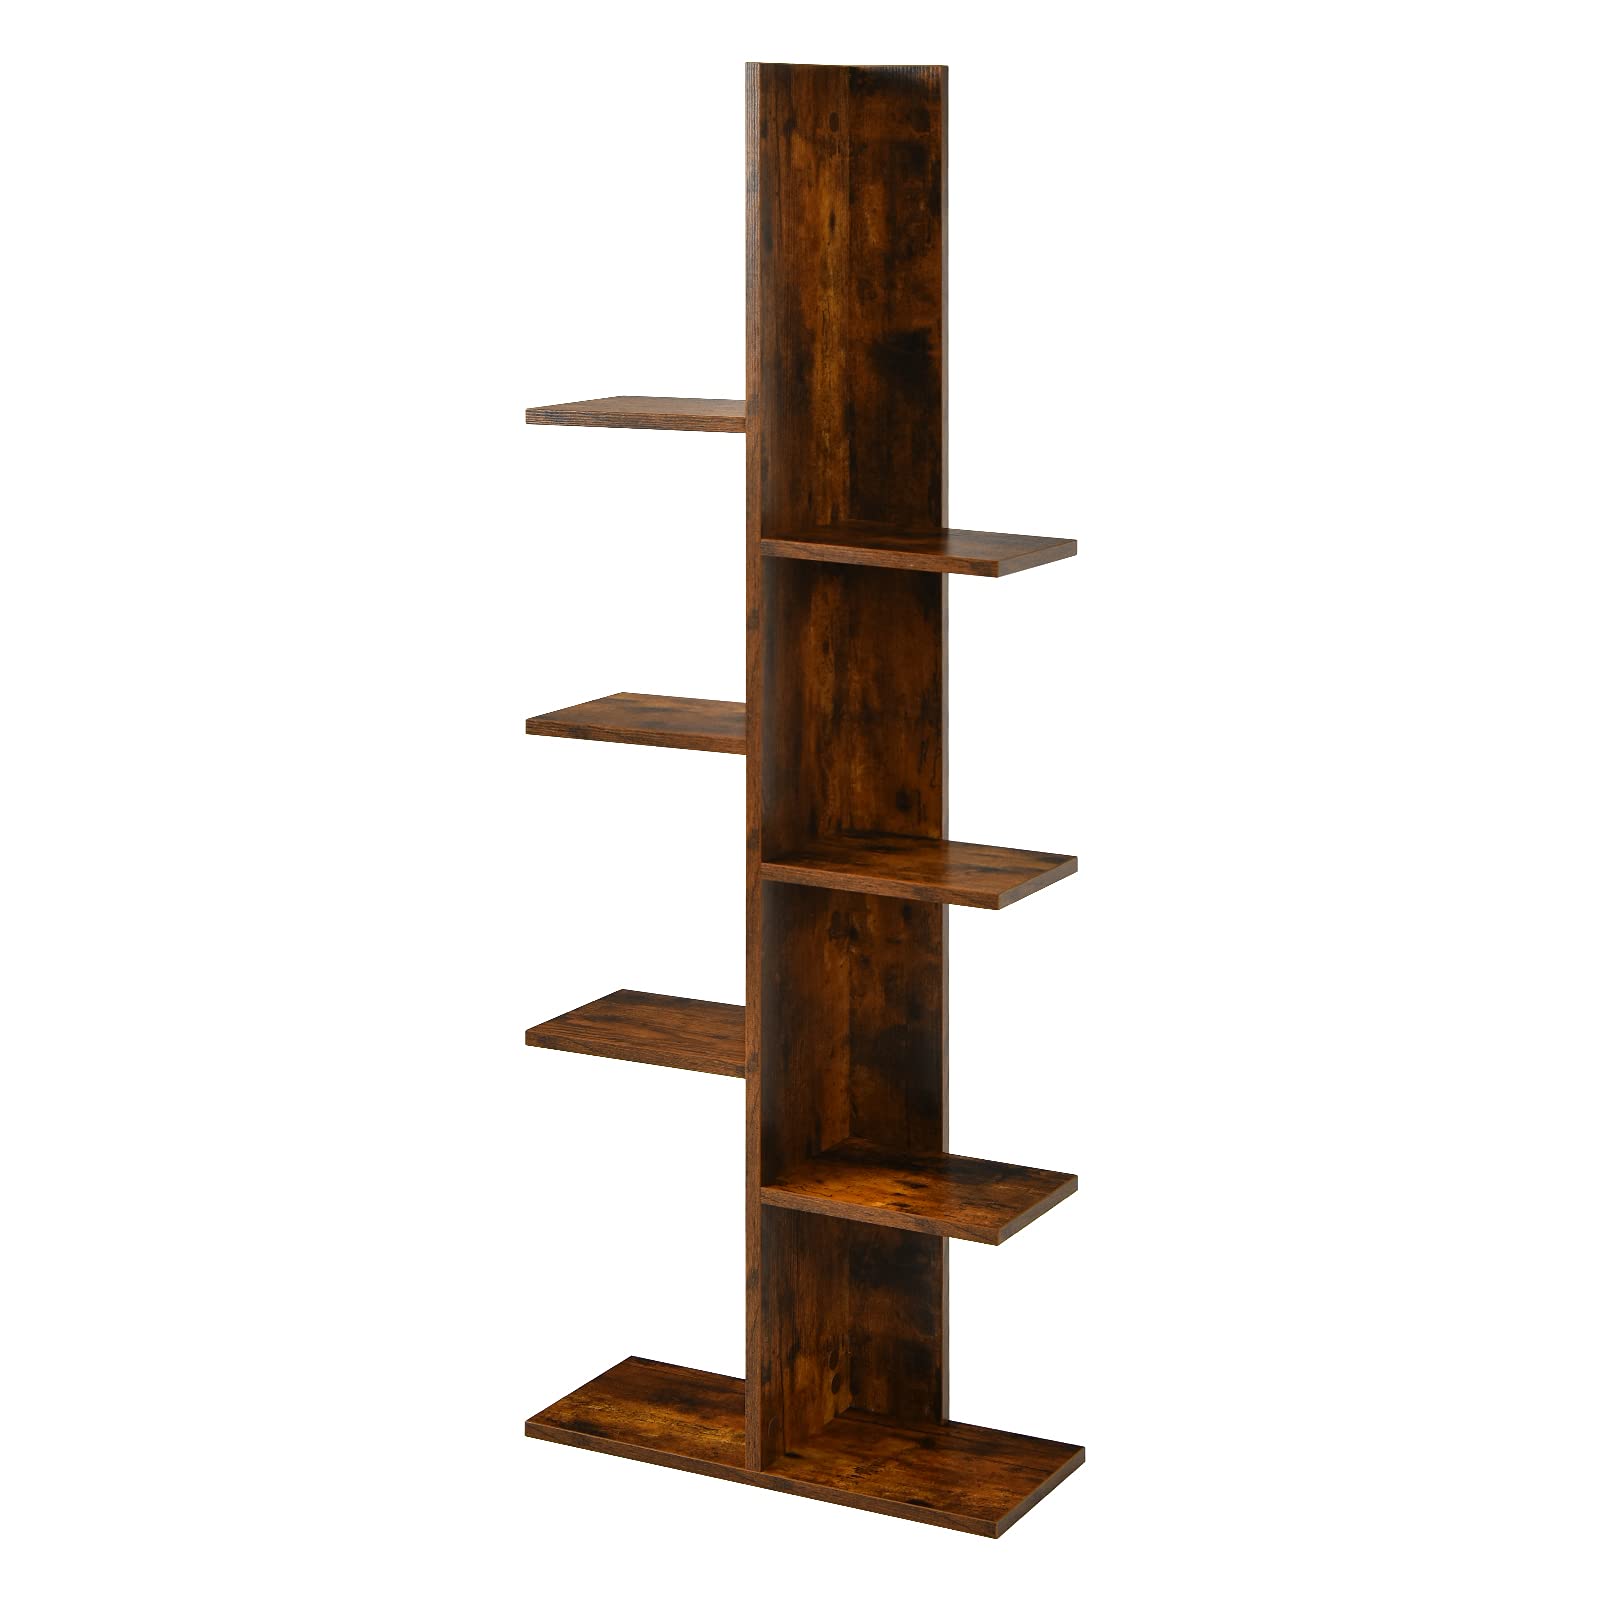 Giantex Wood Bookshelf, 7-Tier Tall Freestanding Tree Bookshelf with Anti-toppling